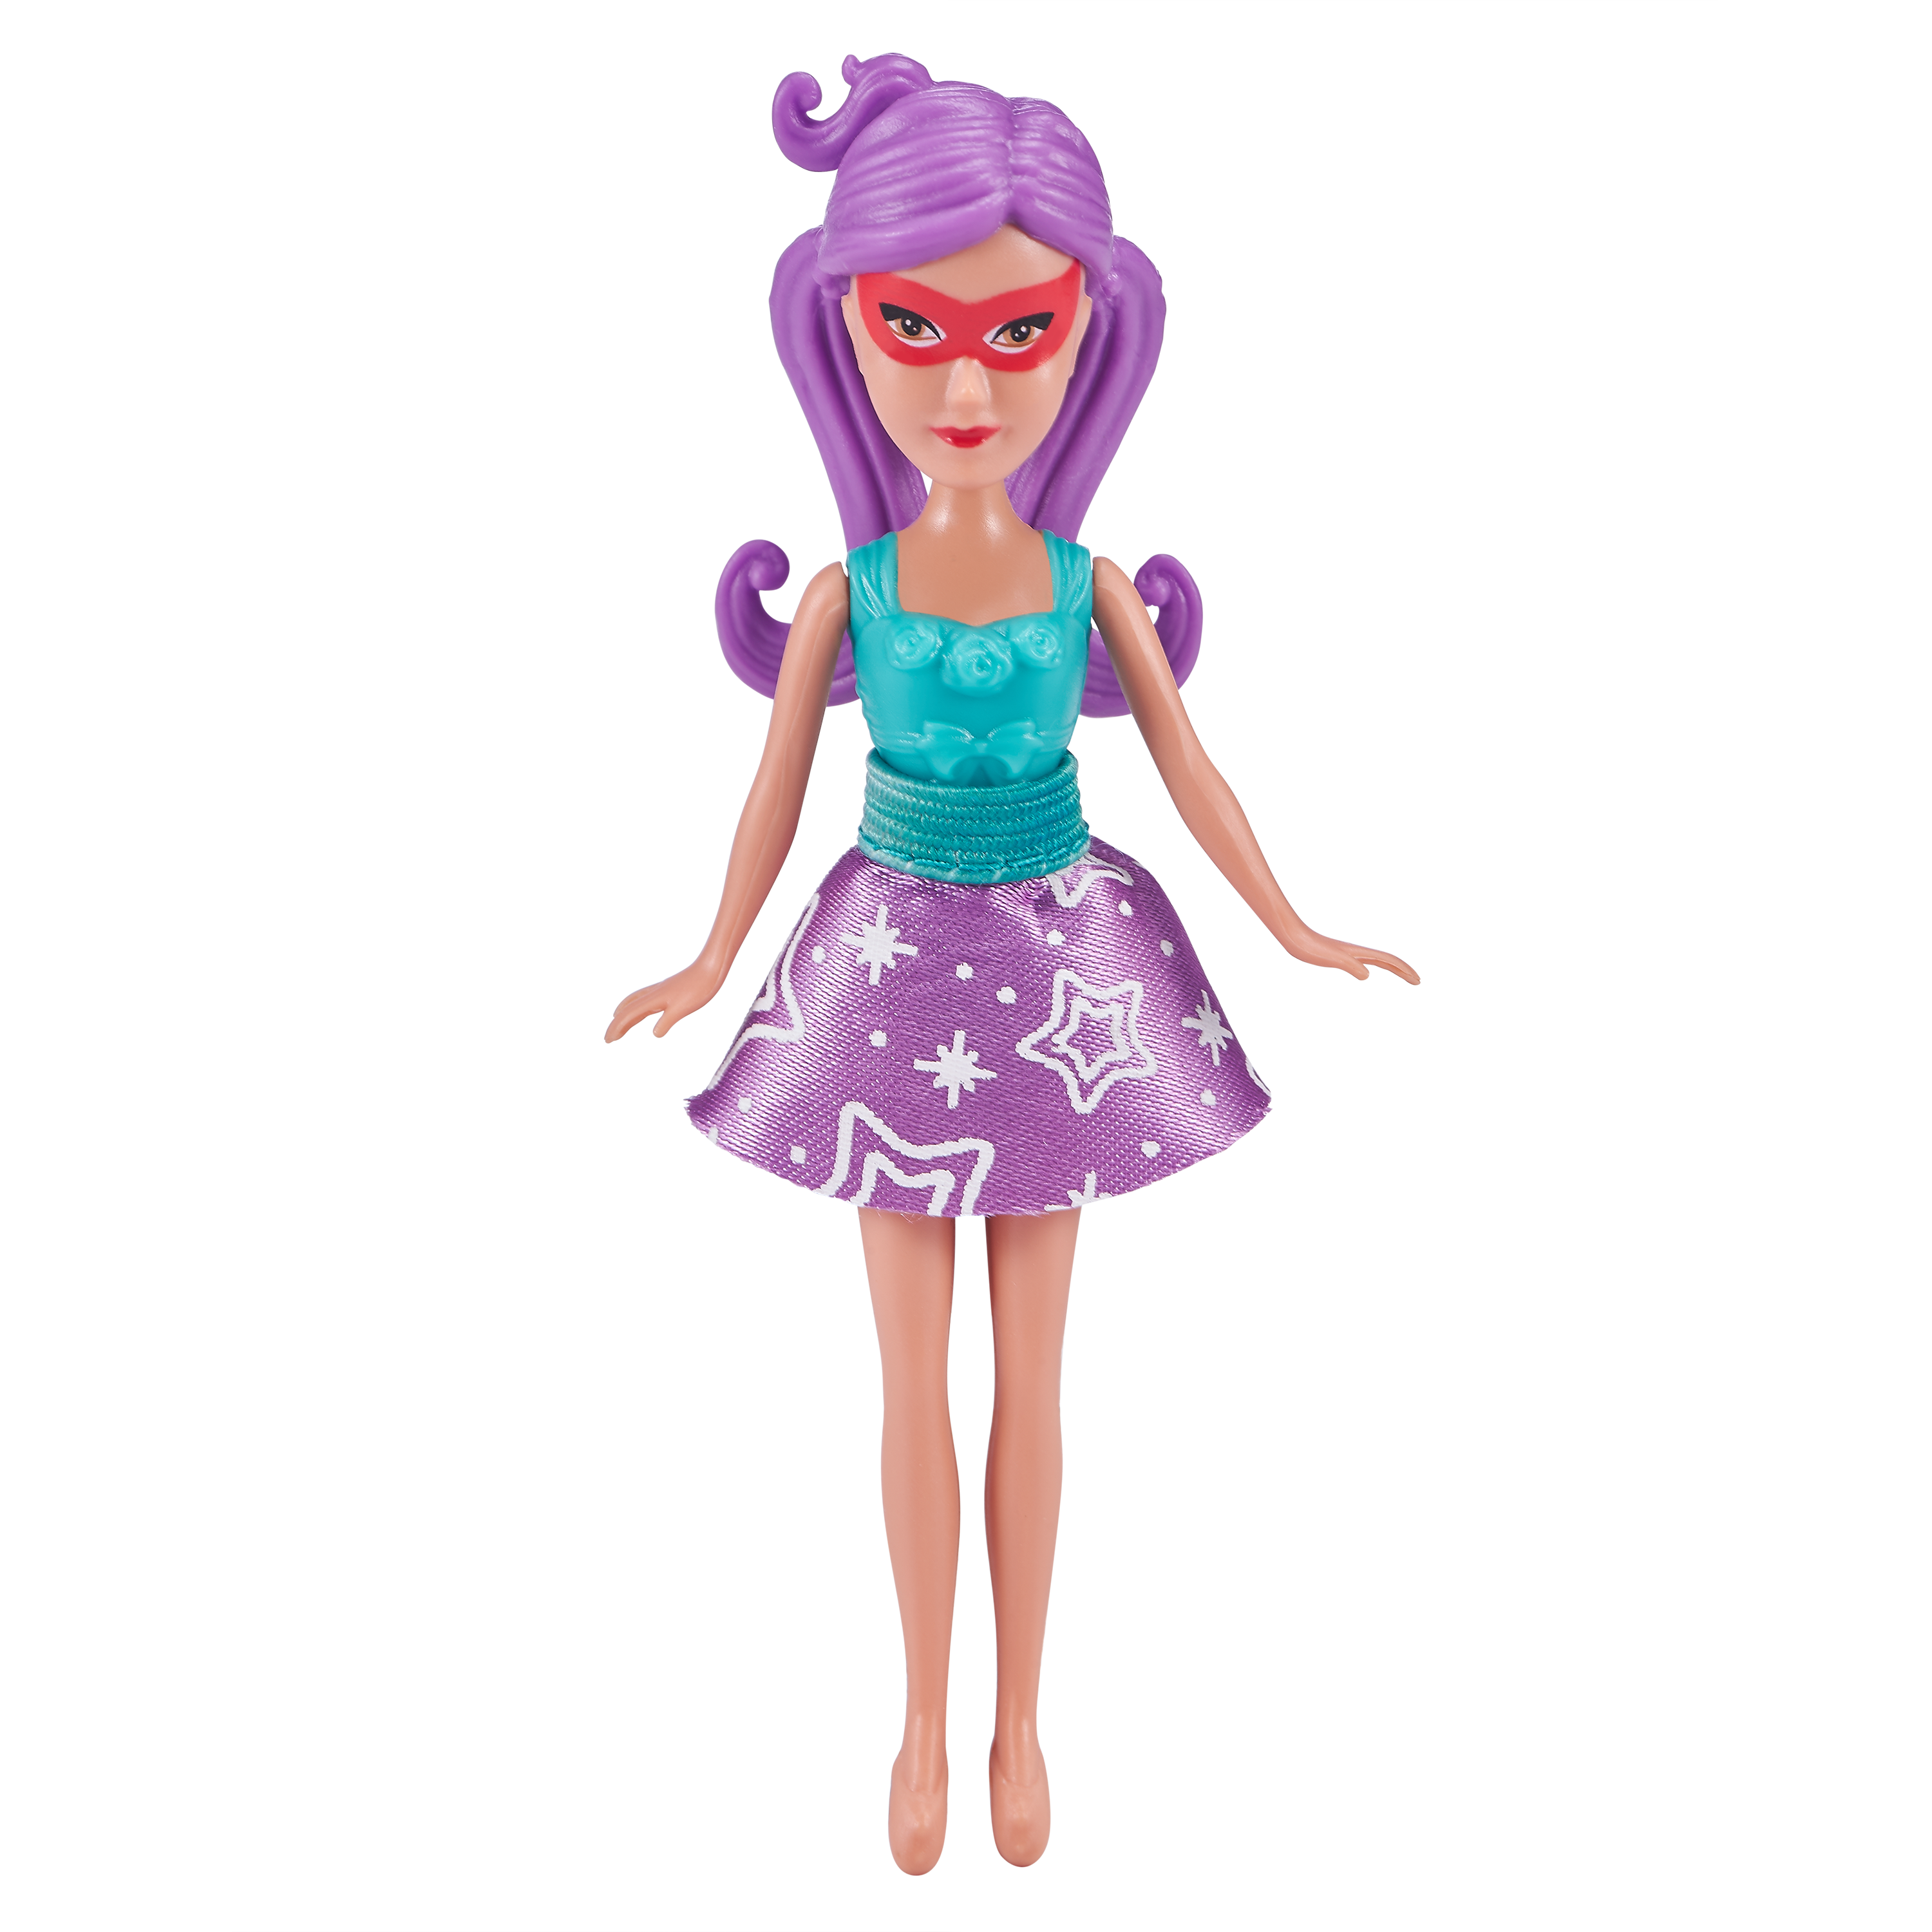 Sparkle Girlz Fancy Cone Fashion Doll - image 4 of 11